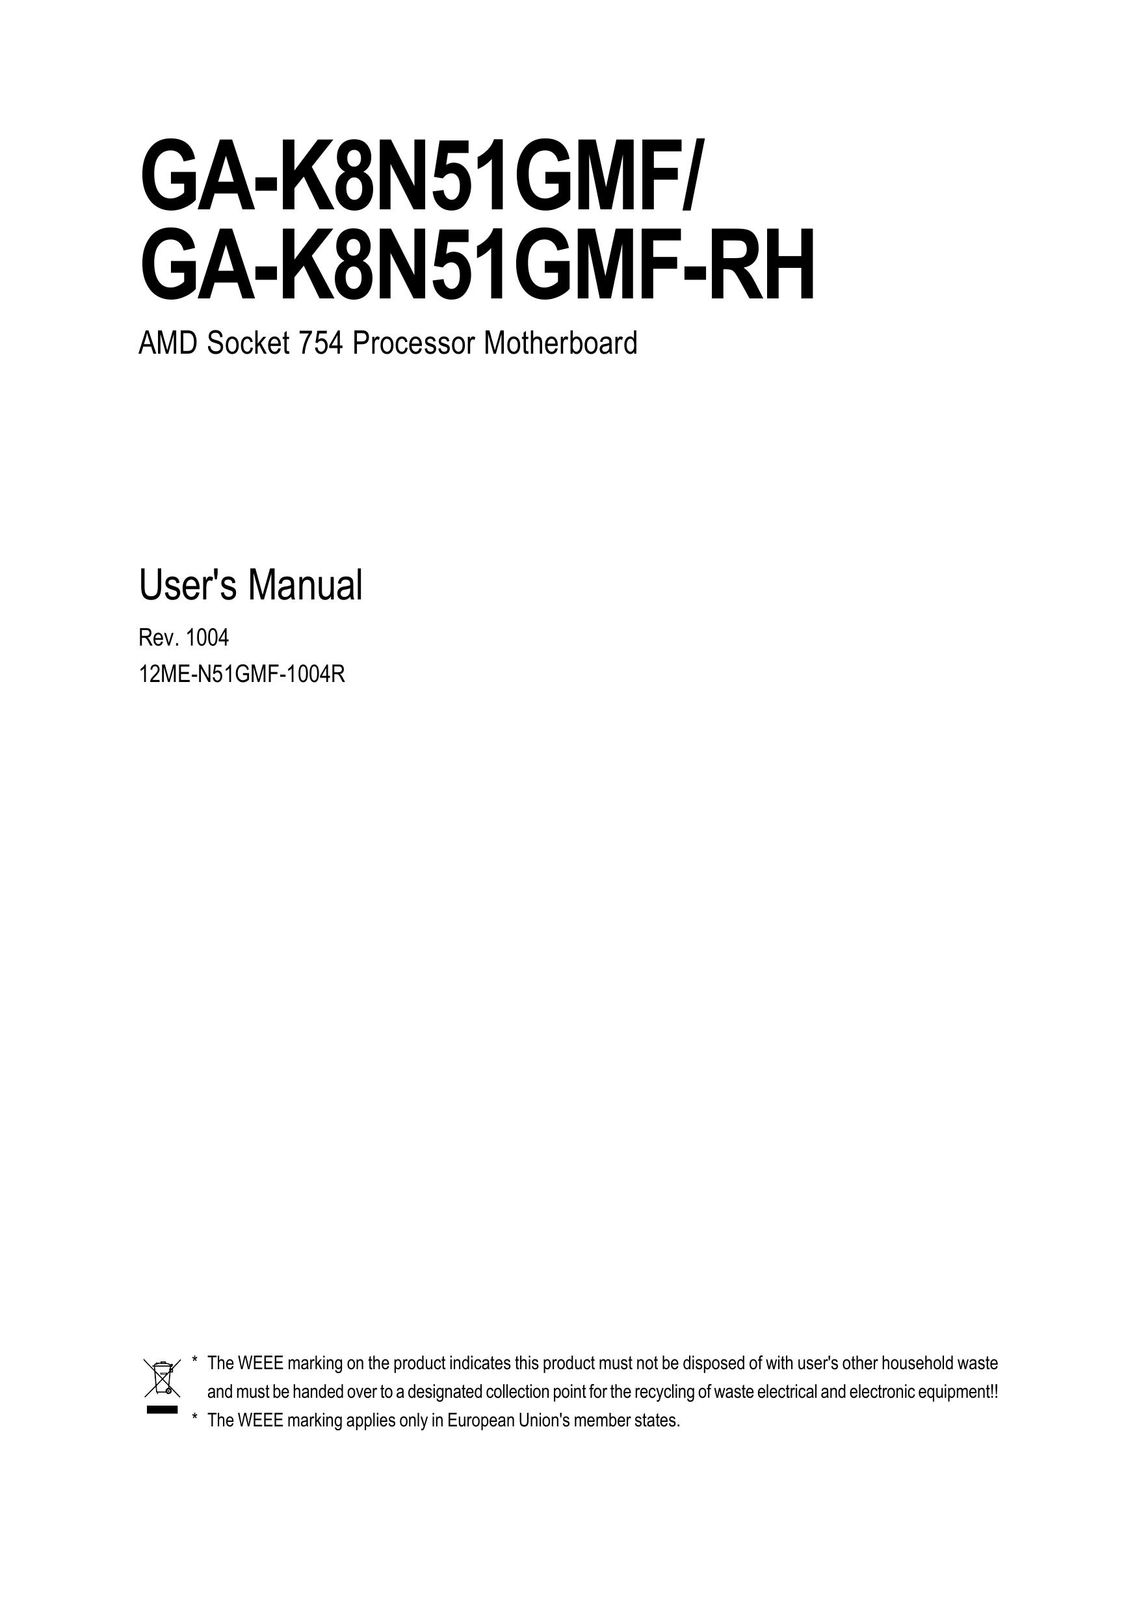 AMD GA-K8N51GMF Computer Hardware User Manual